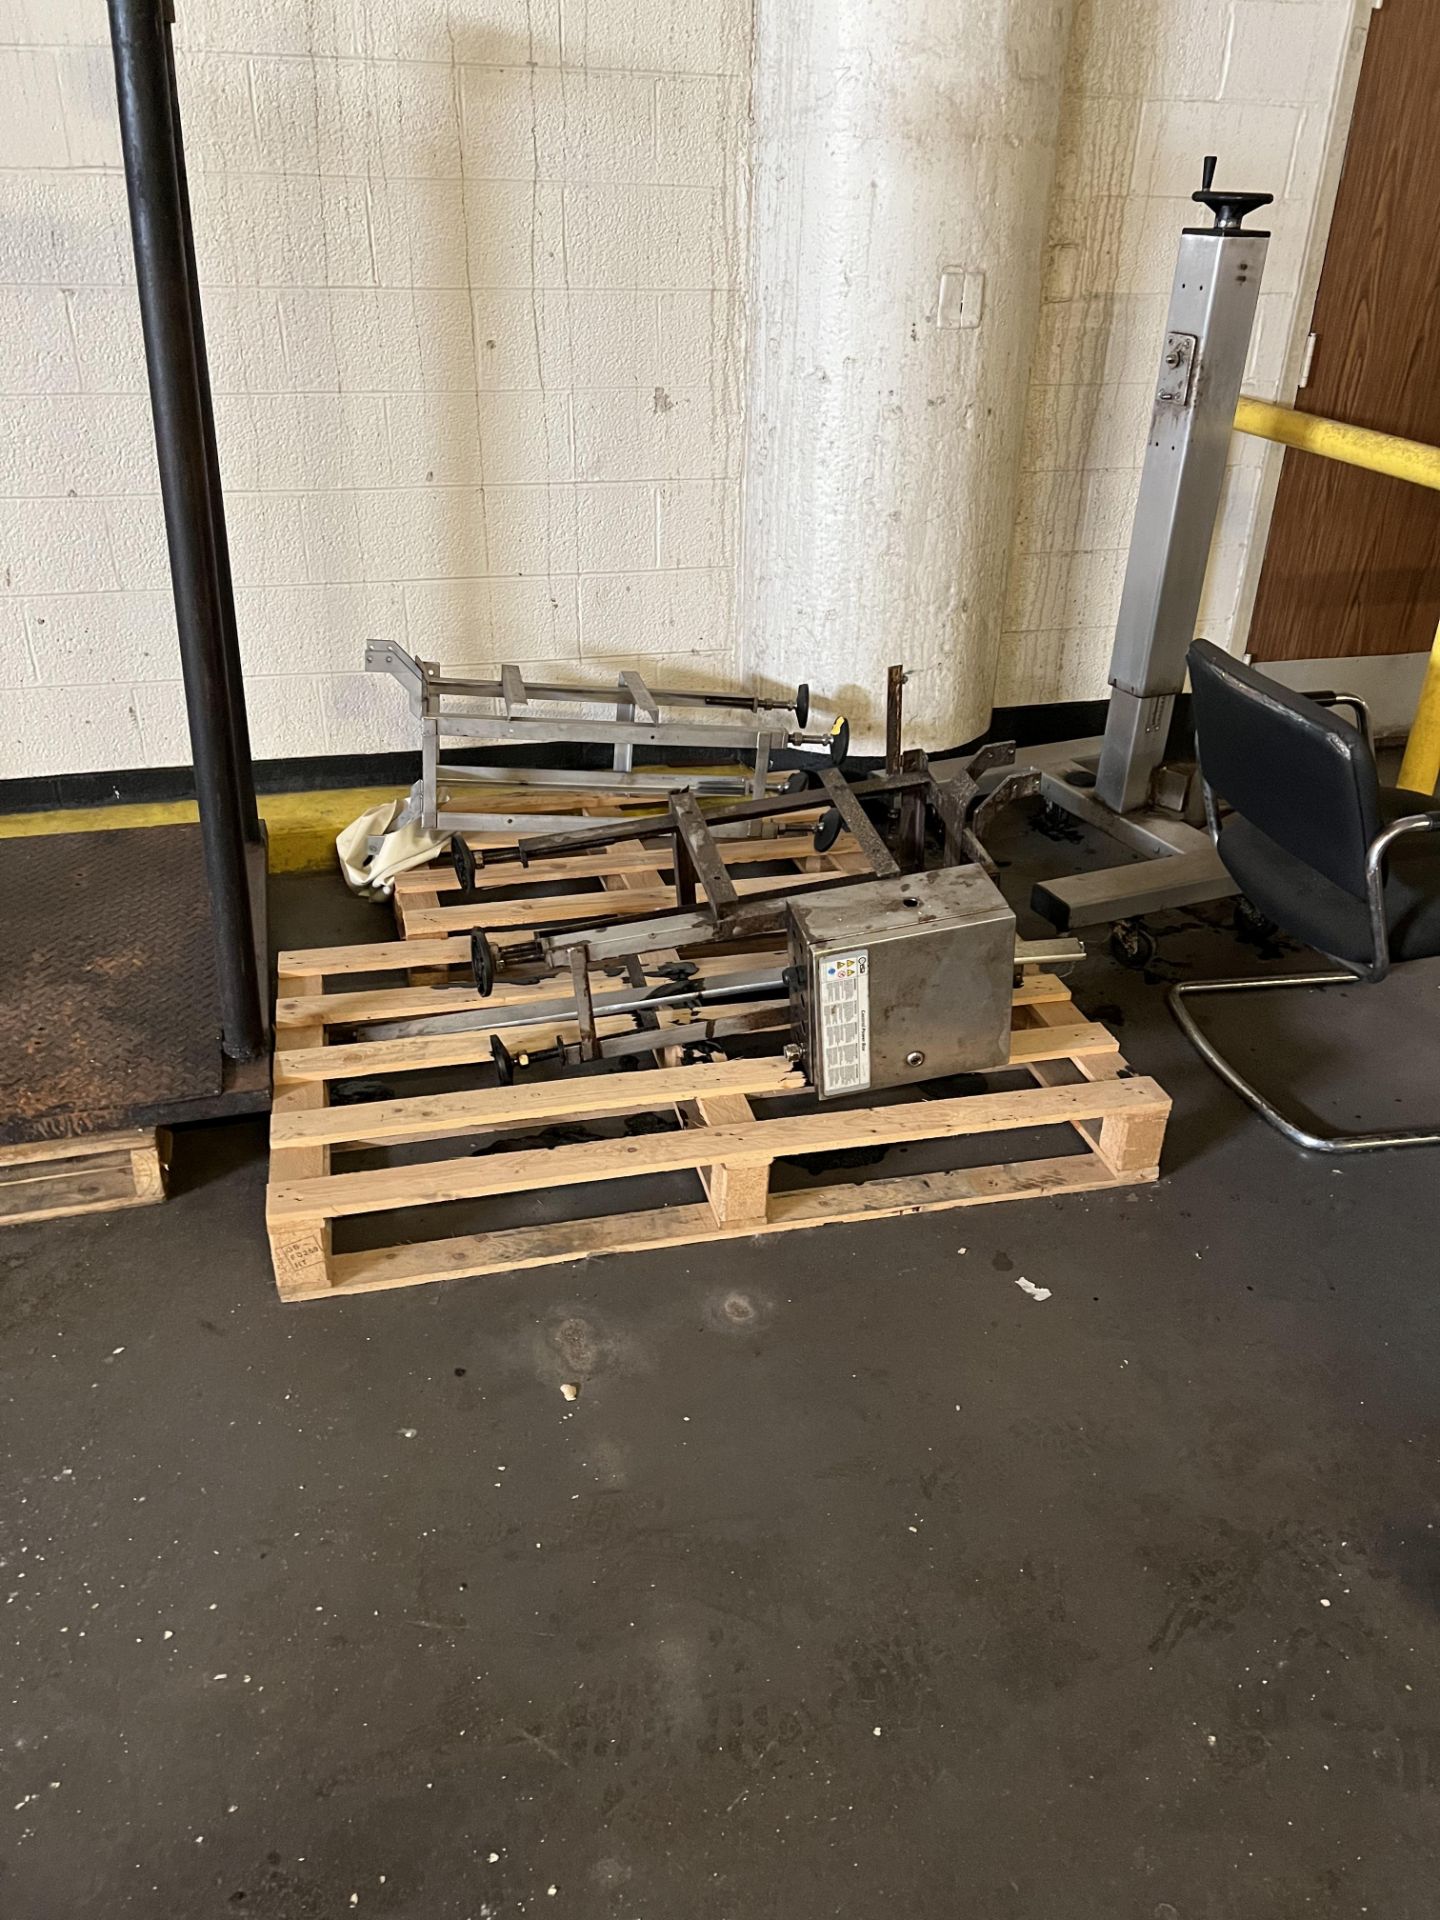 [Lot] Miscellaneous shelving, dock carts, frames - Image 4 of 5